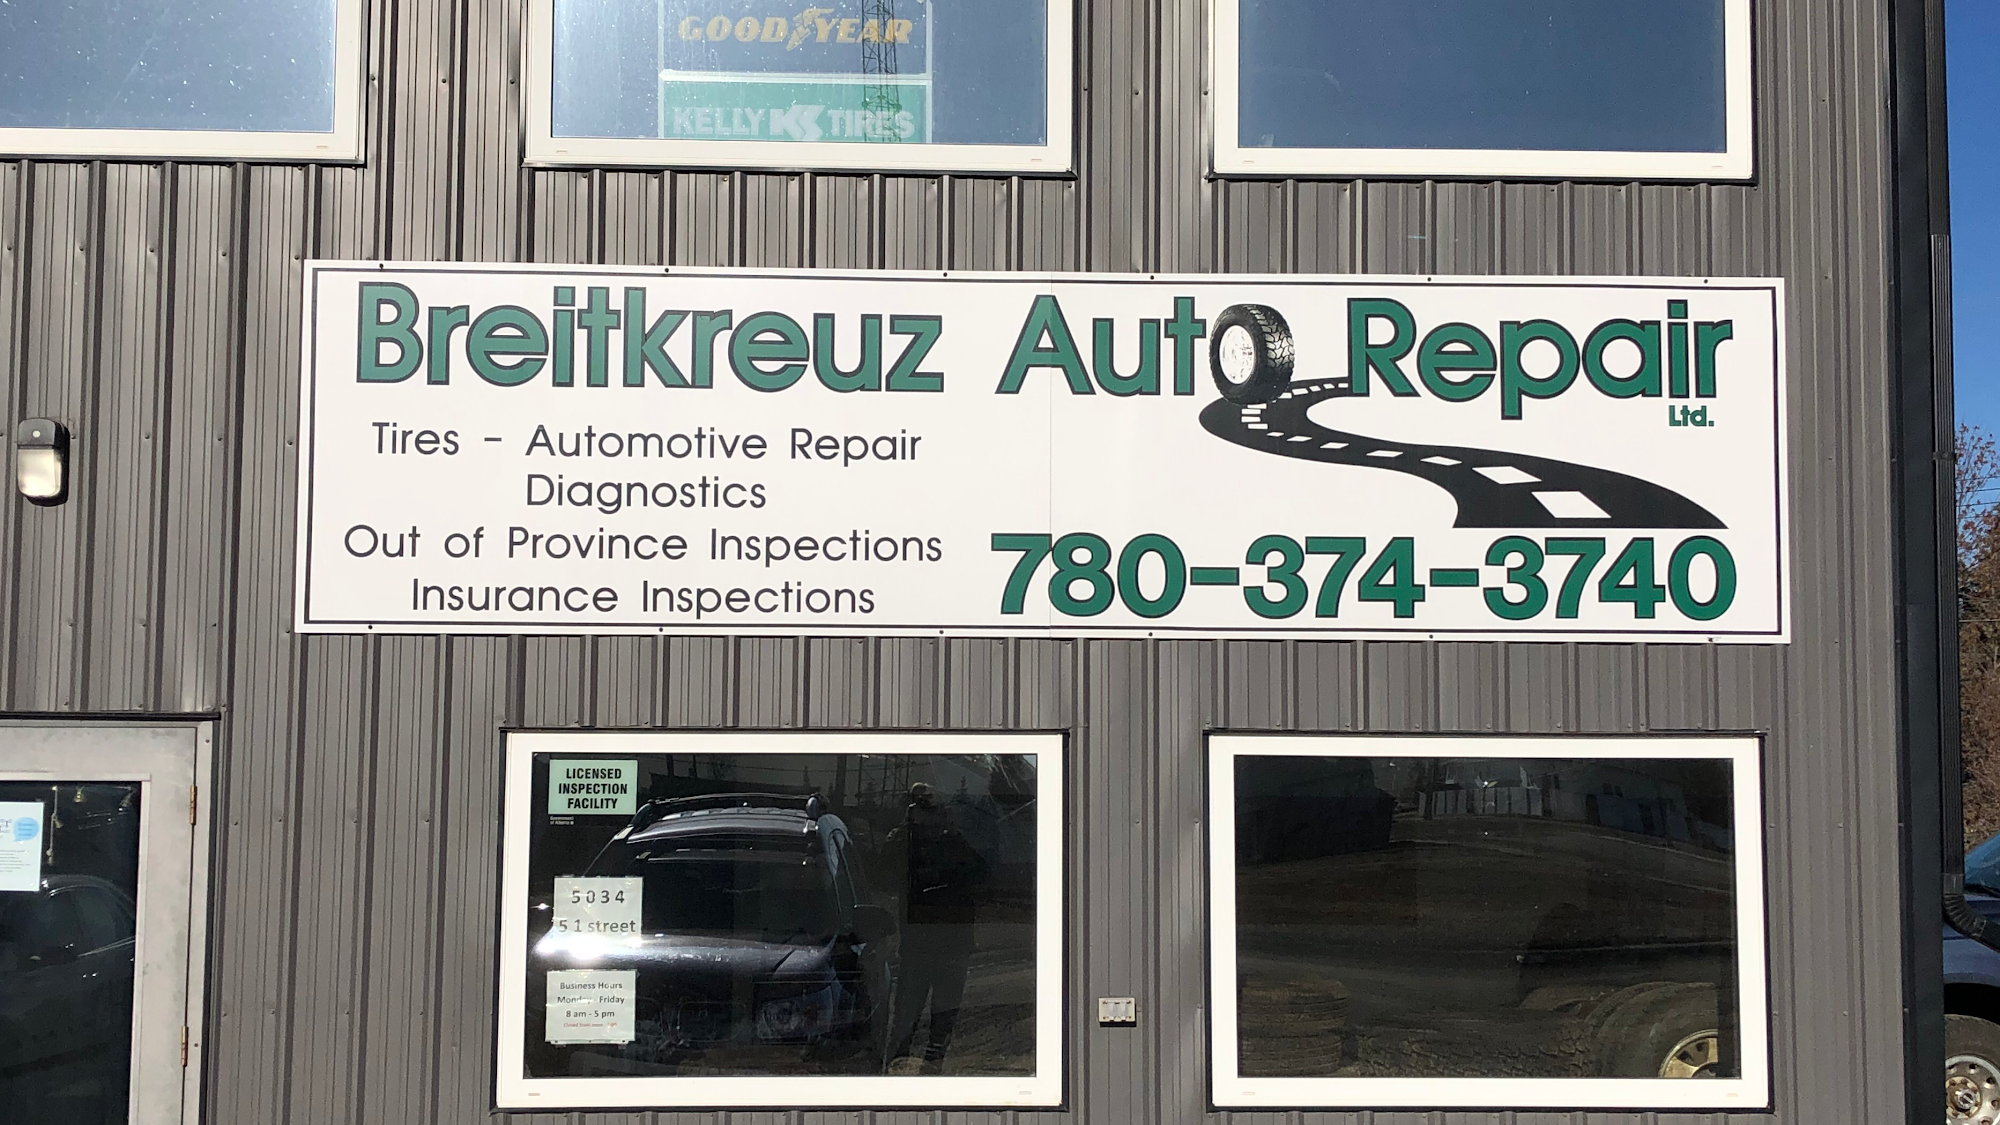 Breitkreuz Auto Repair Ltd 5034 51 St, Daysland Alberta T0B 1A0